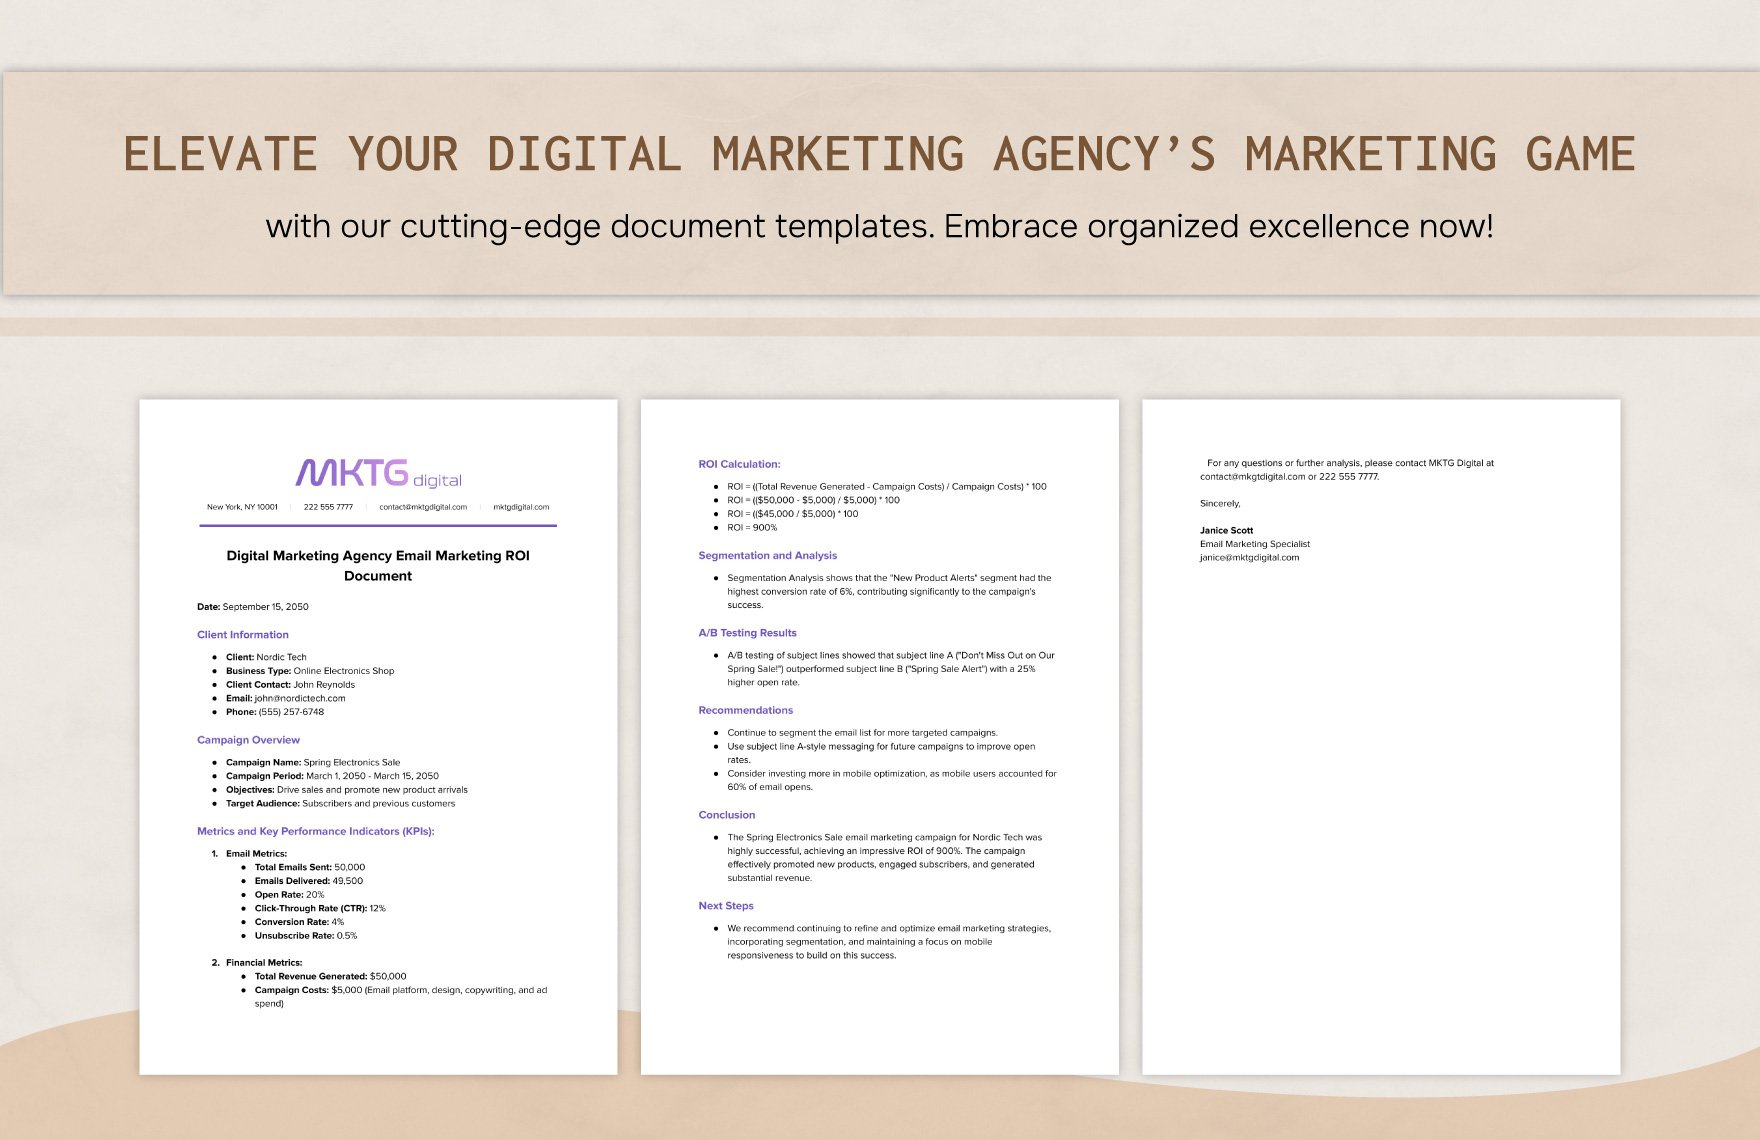 Digital Marketing Agency Email Marketing ROI Document Template